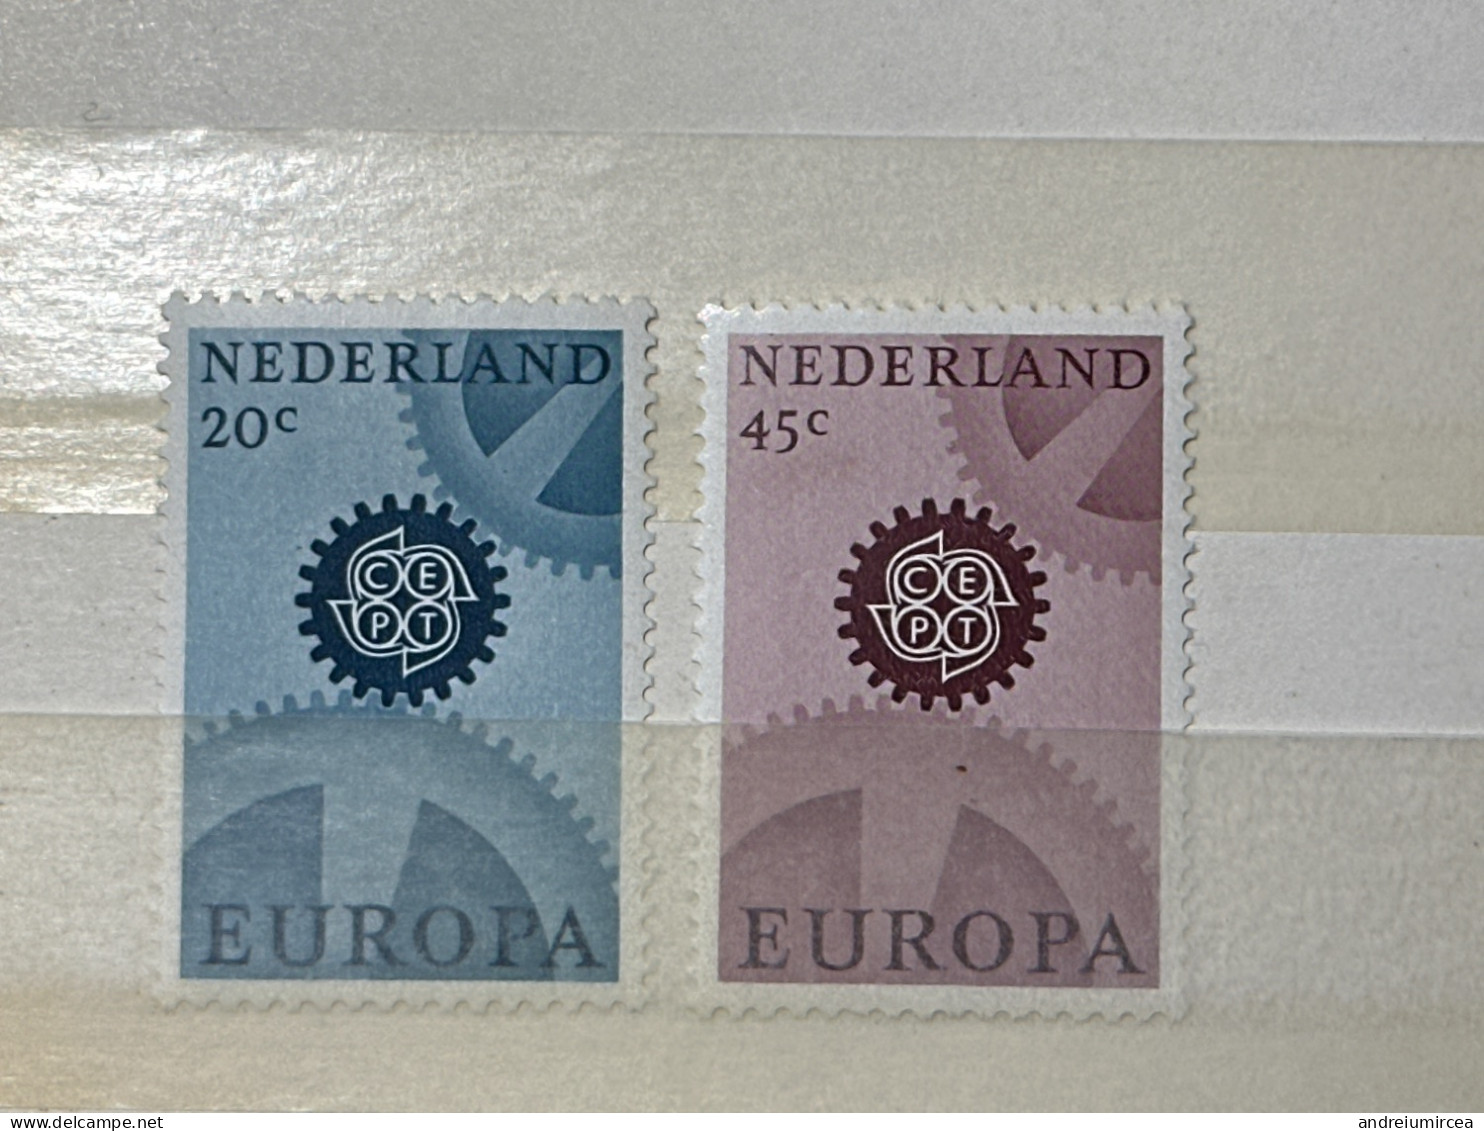 Nederland  MNH 1967 - 1967